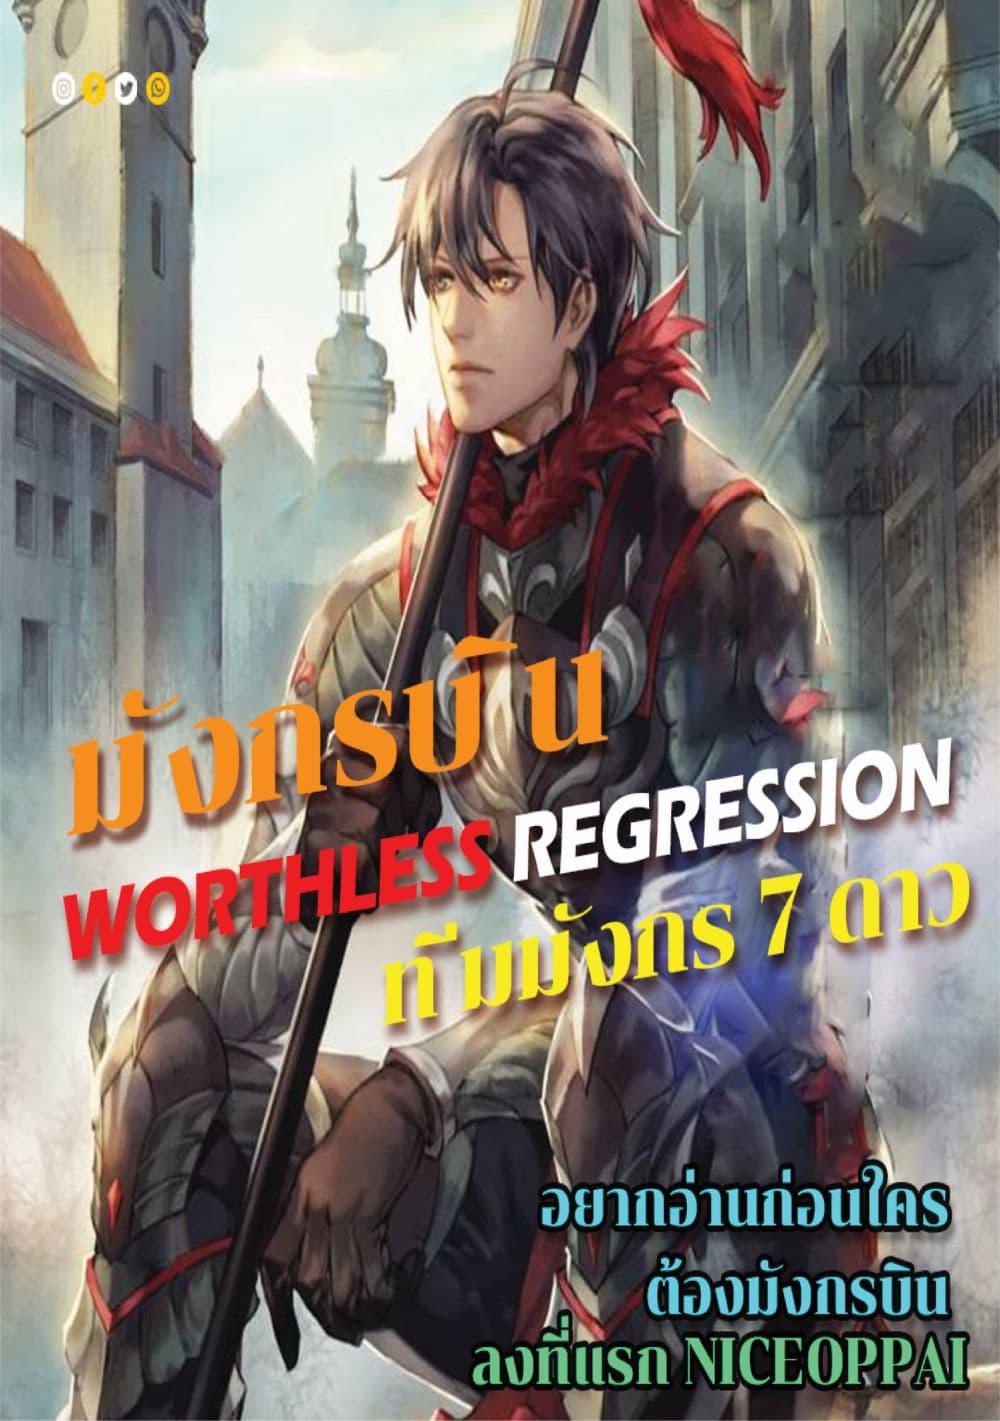 Worthless Regression 16 67